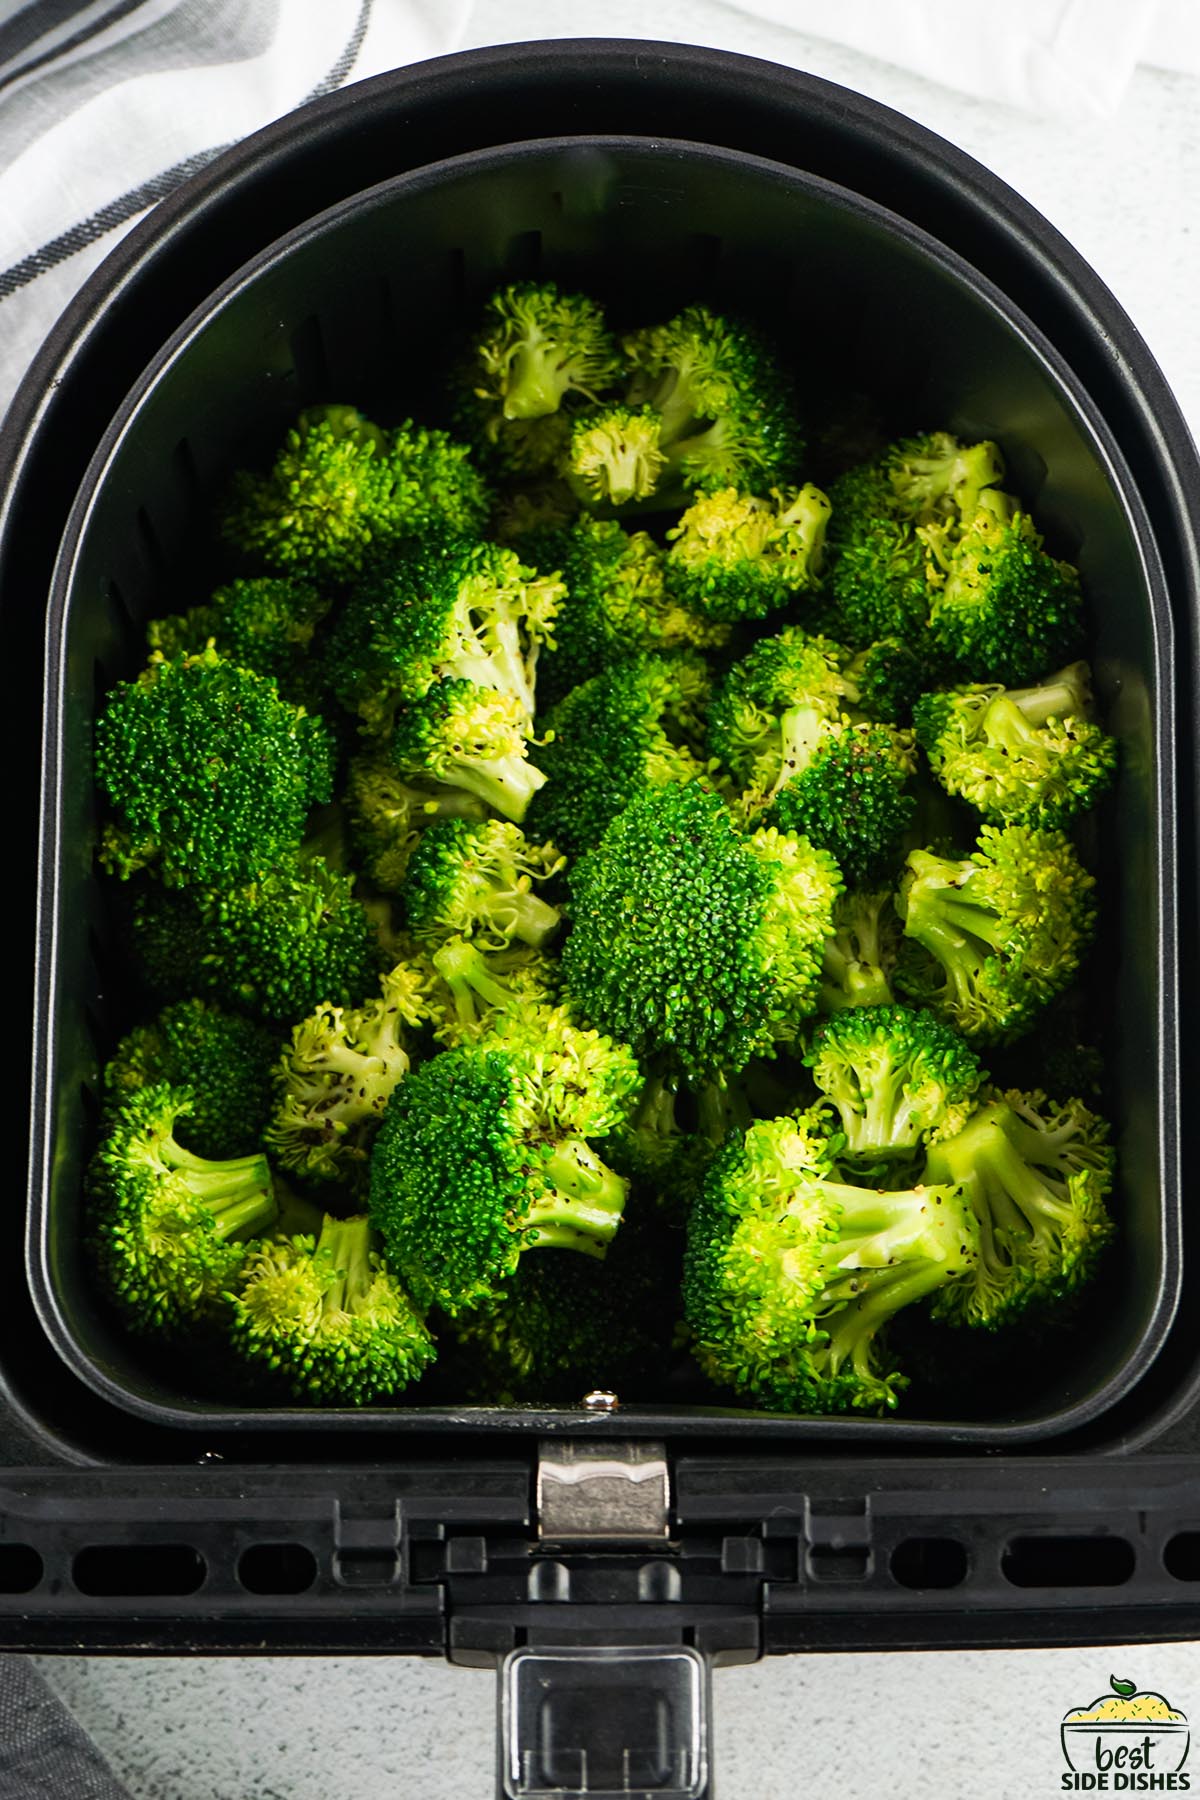 broccoli coated in oil and seasonings in an air fryer basket